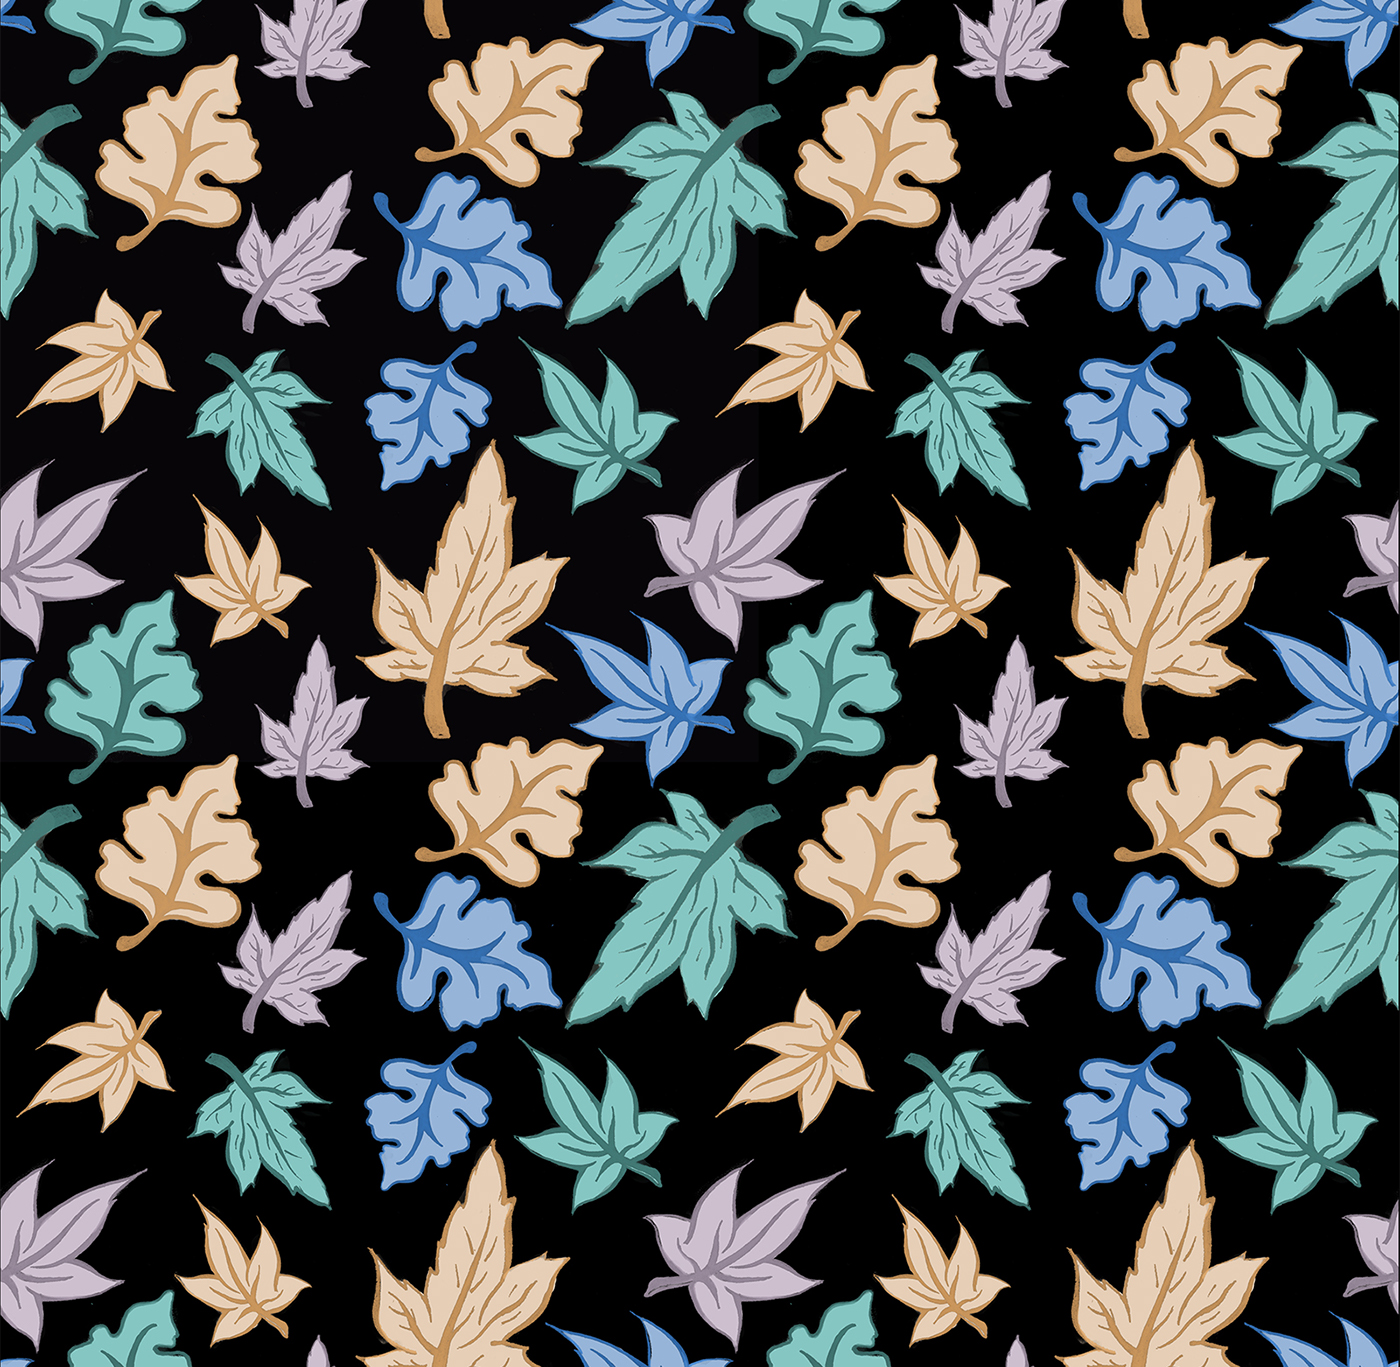 Fall leaves season leaf shrubbery Nature pattern textile repeating ILLUSTRATION 